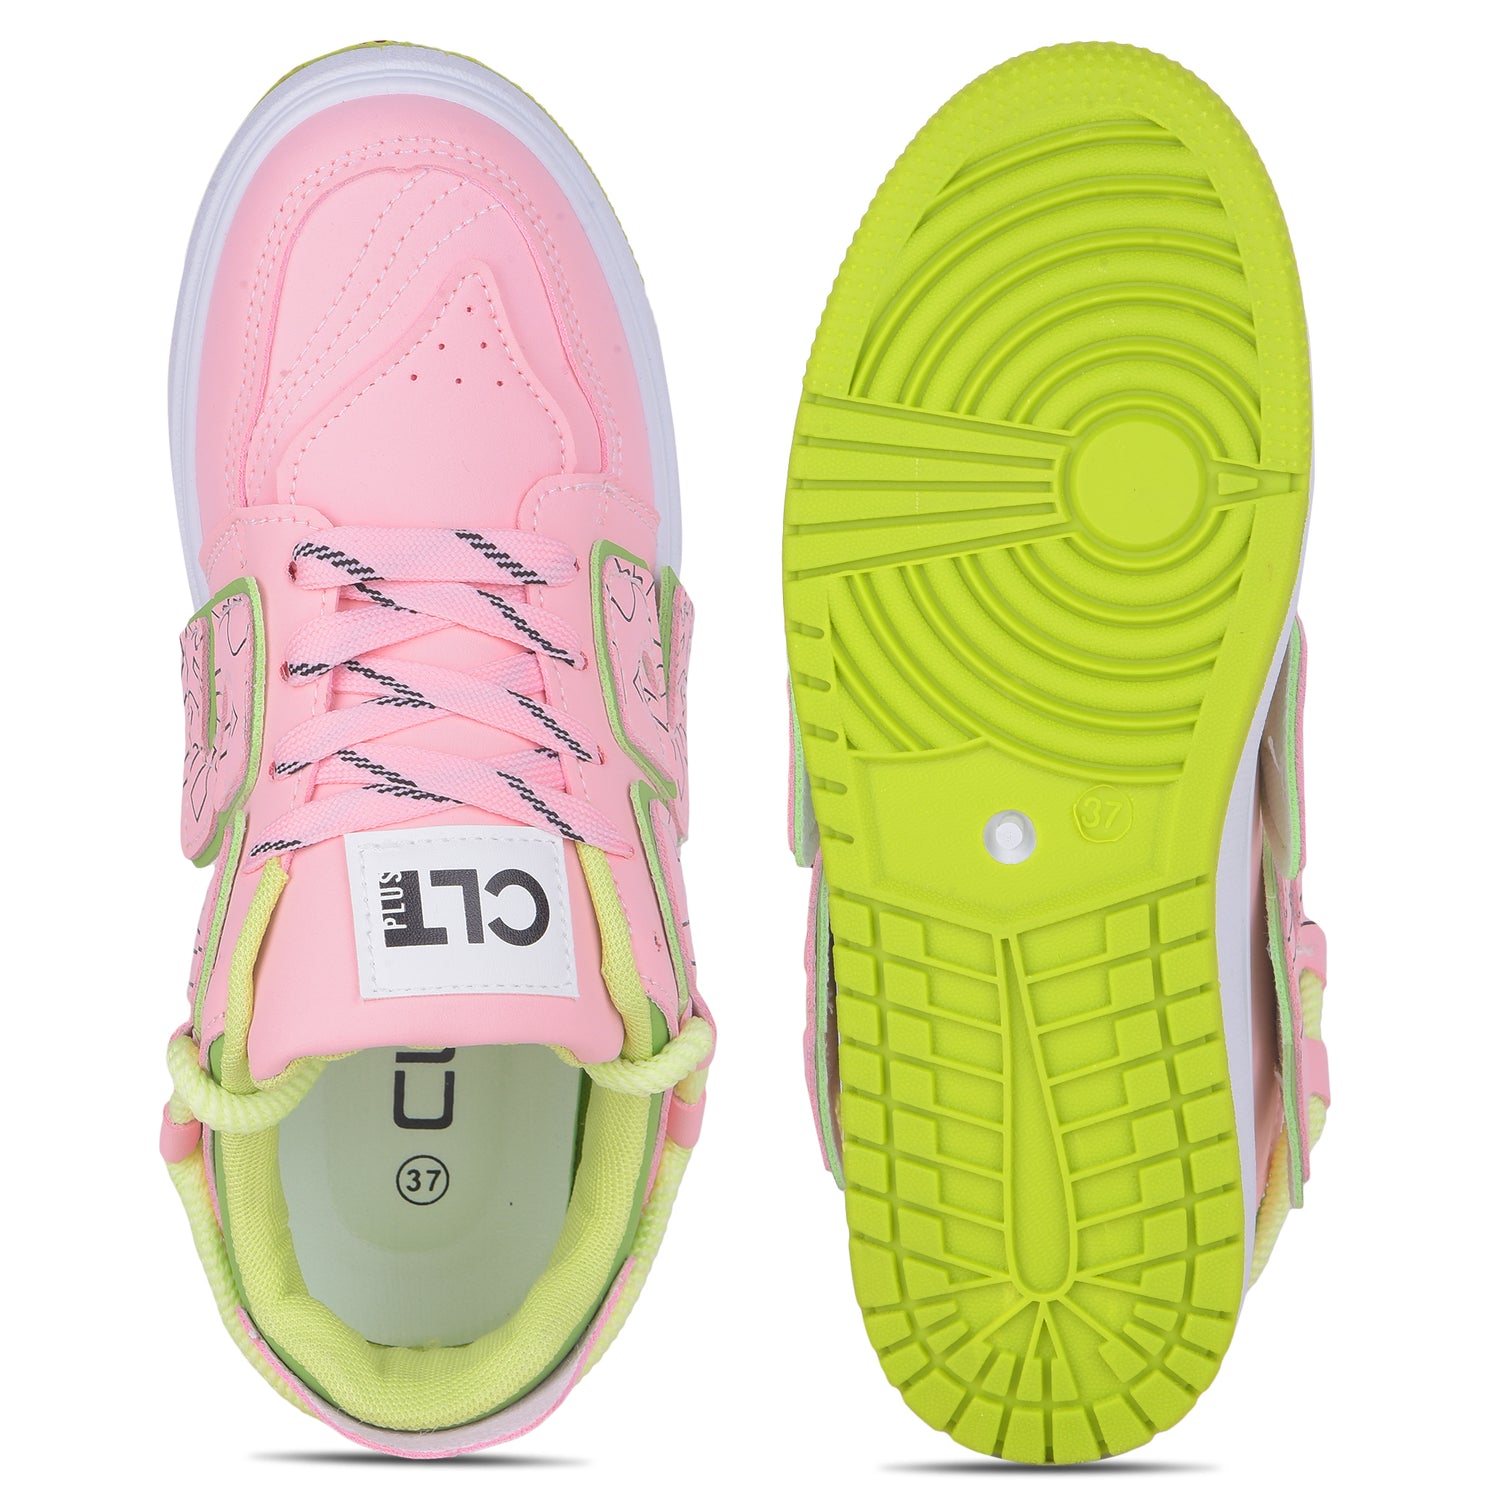 Calcetto LDS-036 Pink Women Sneaker